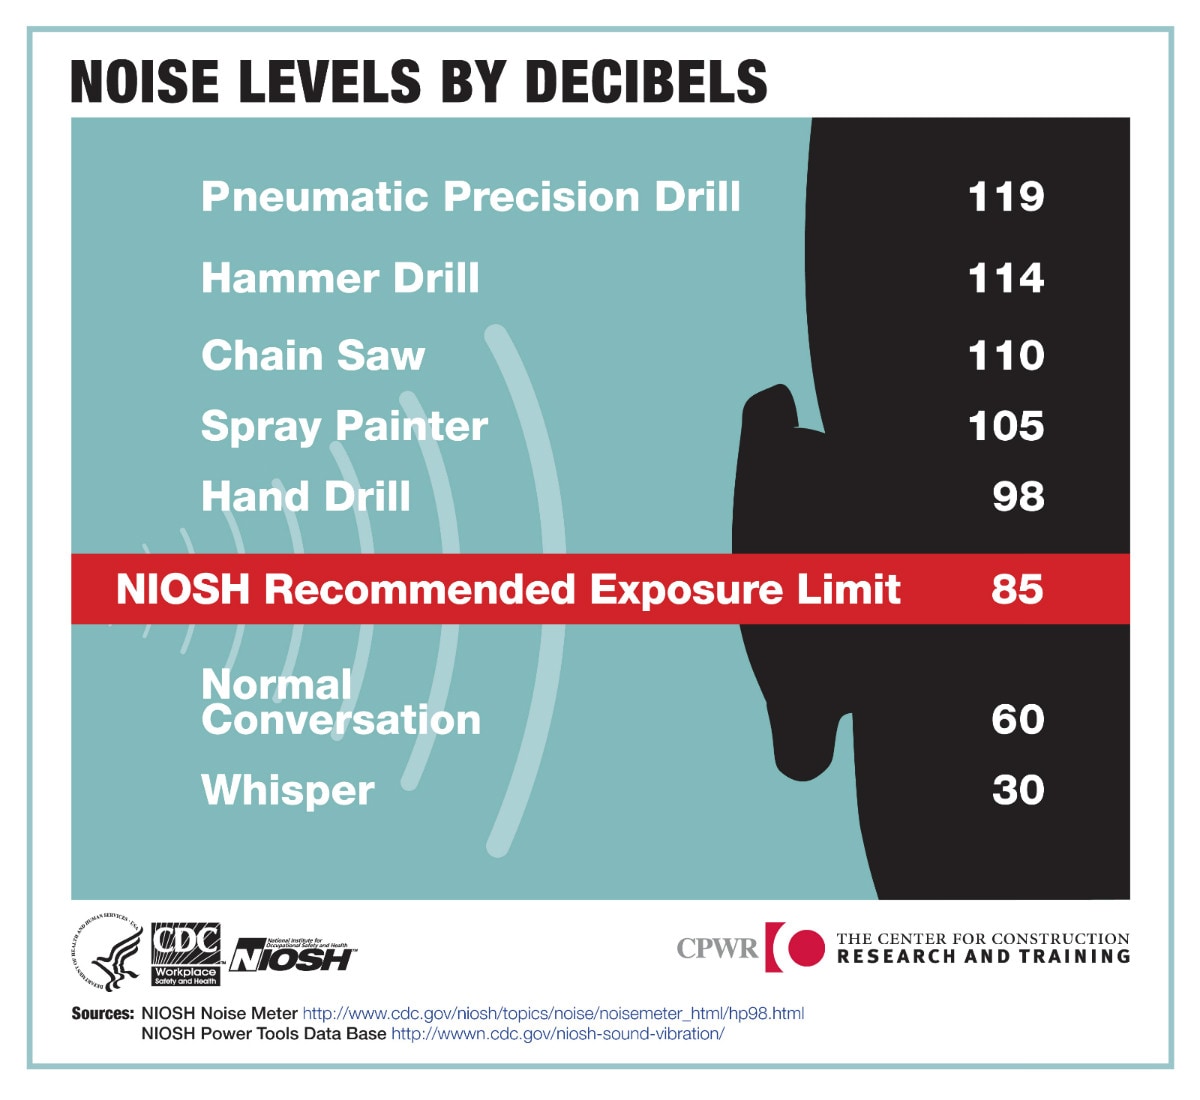 Sound Level Chart Db